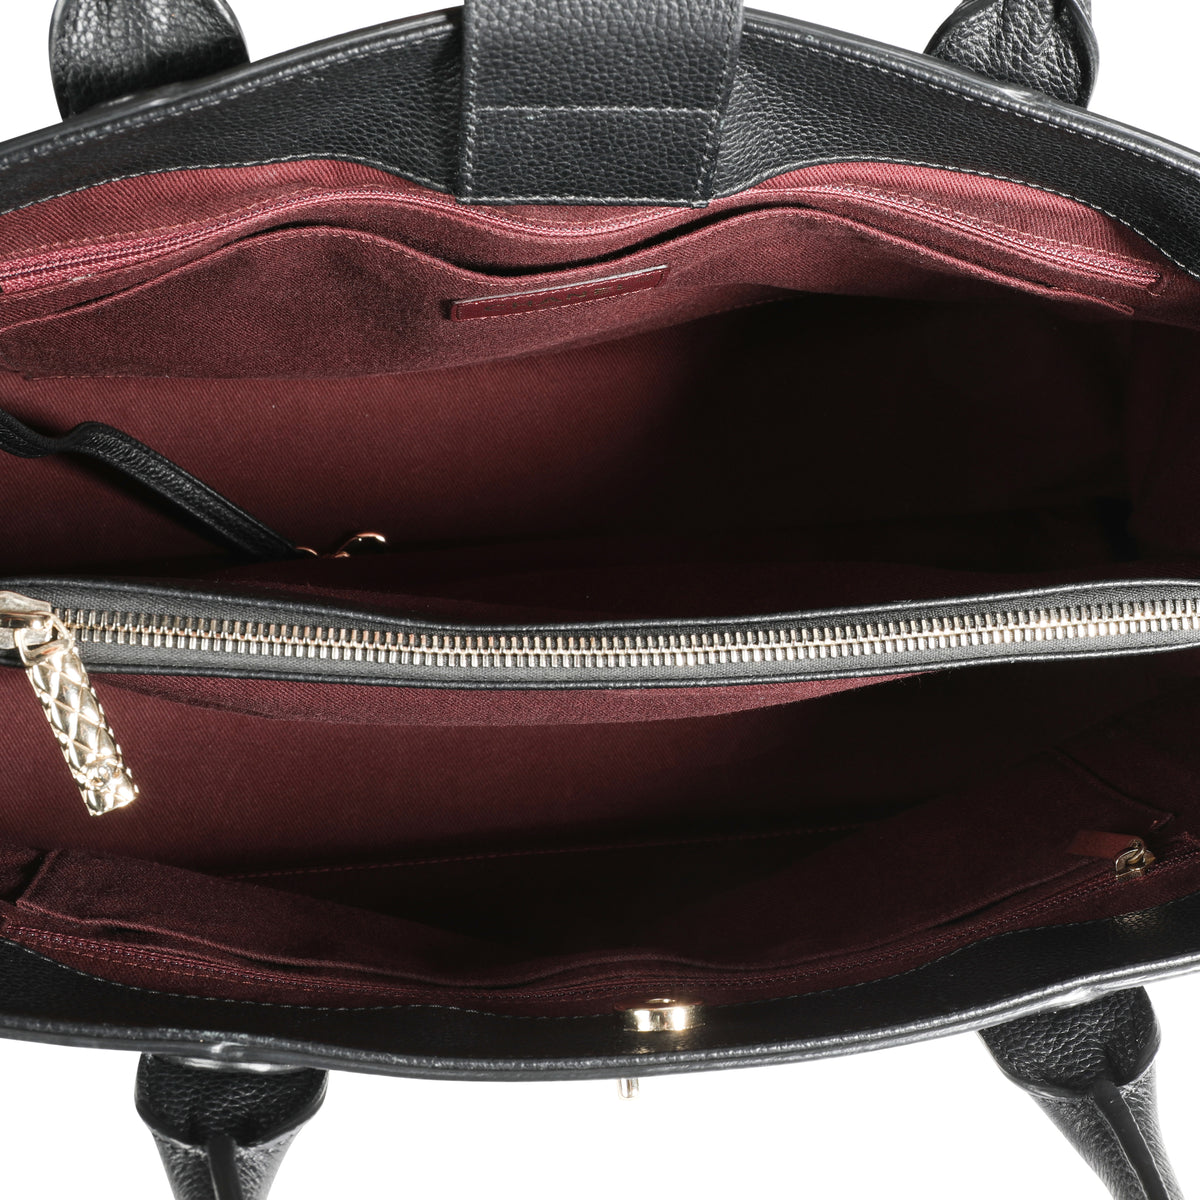 Chanel Black Grained Calfskin Leather Neo Executive Mini Tote Bag